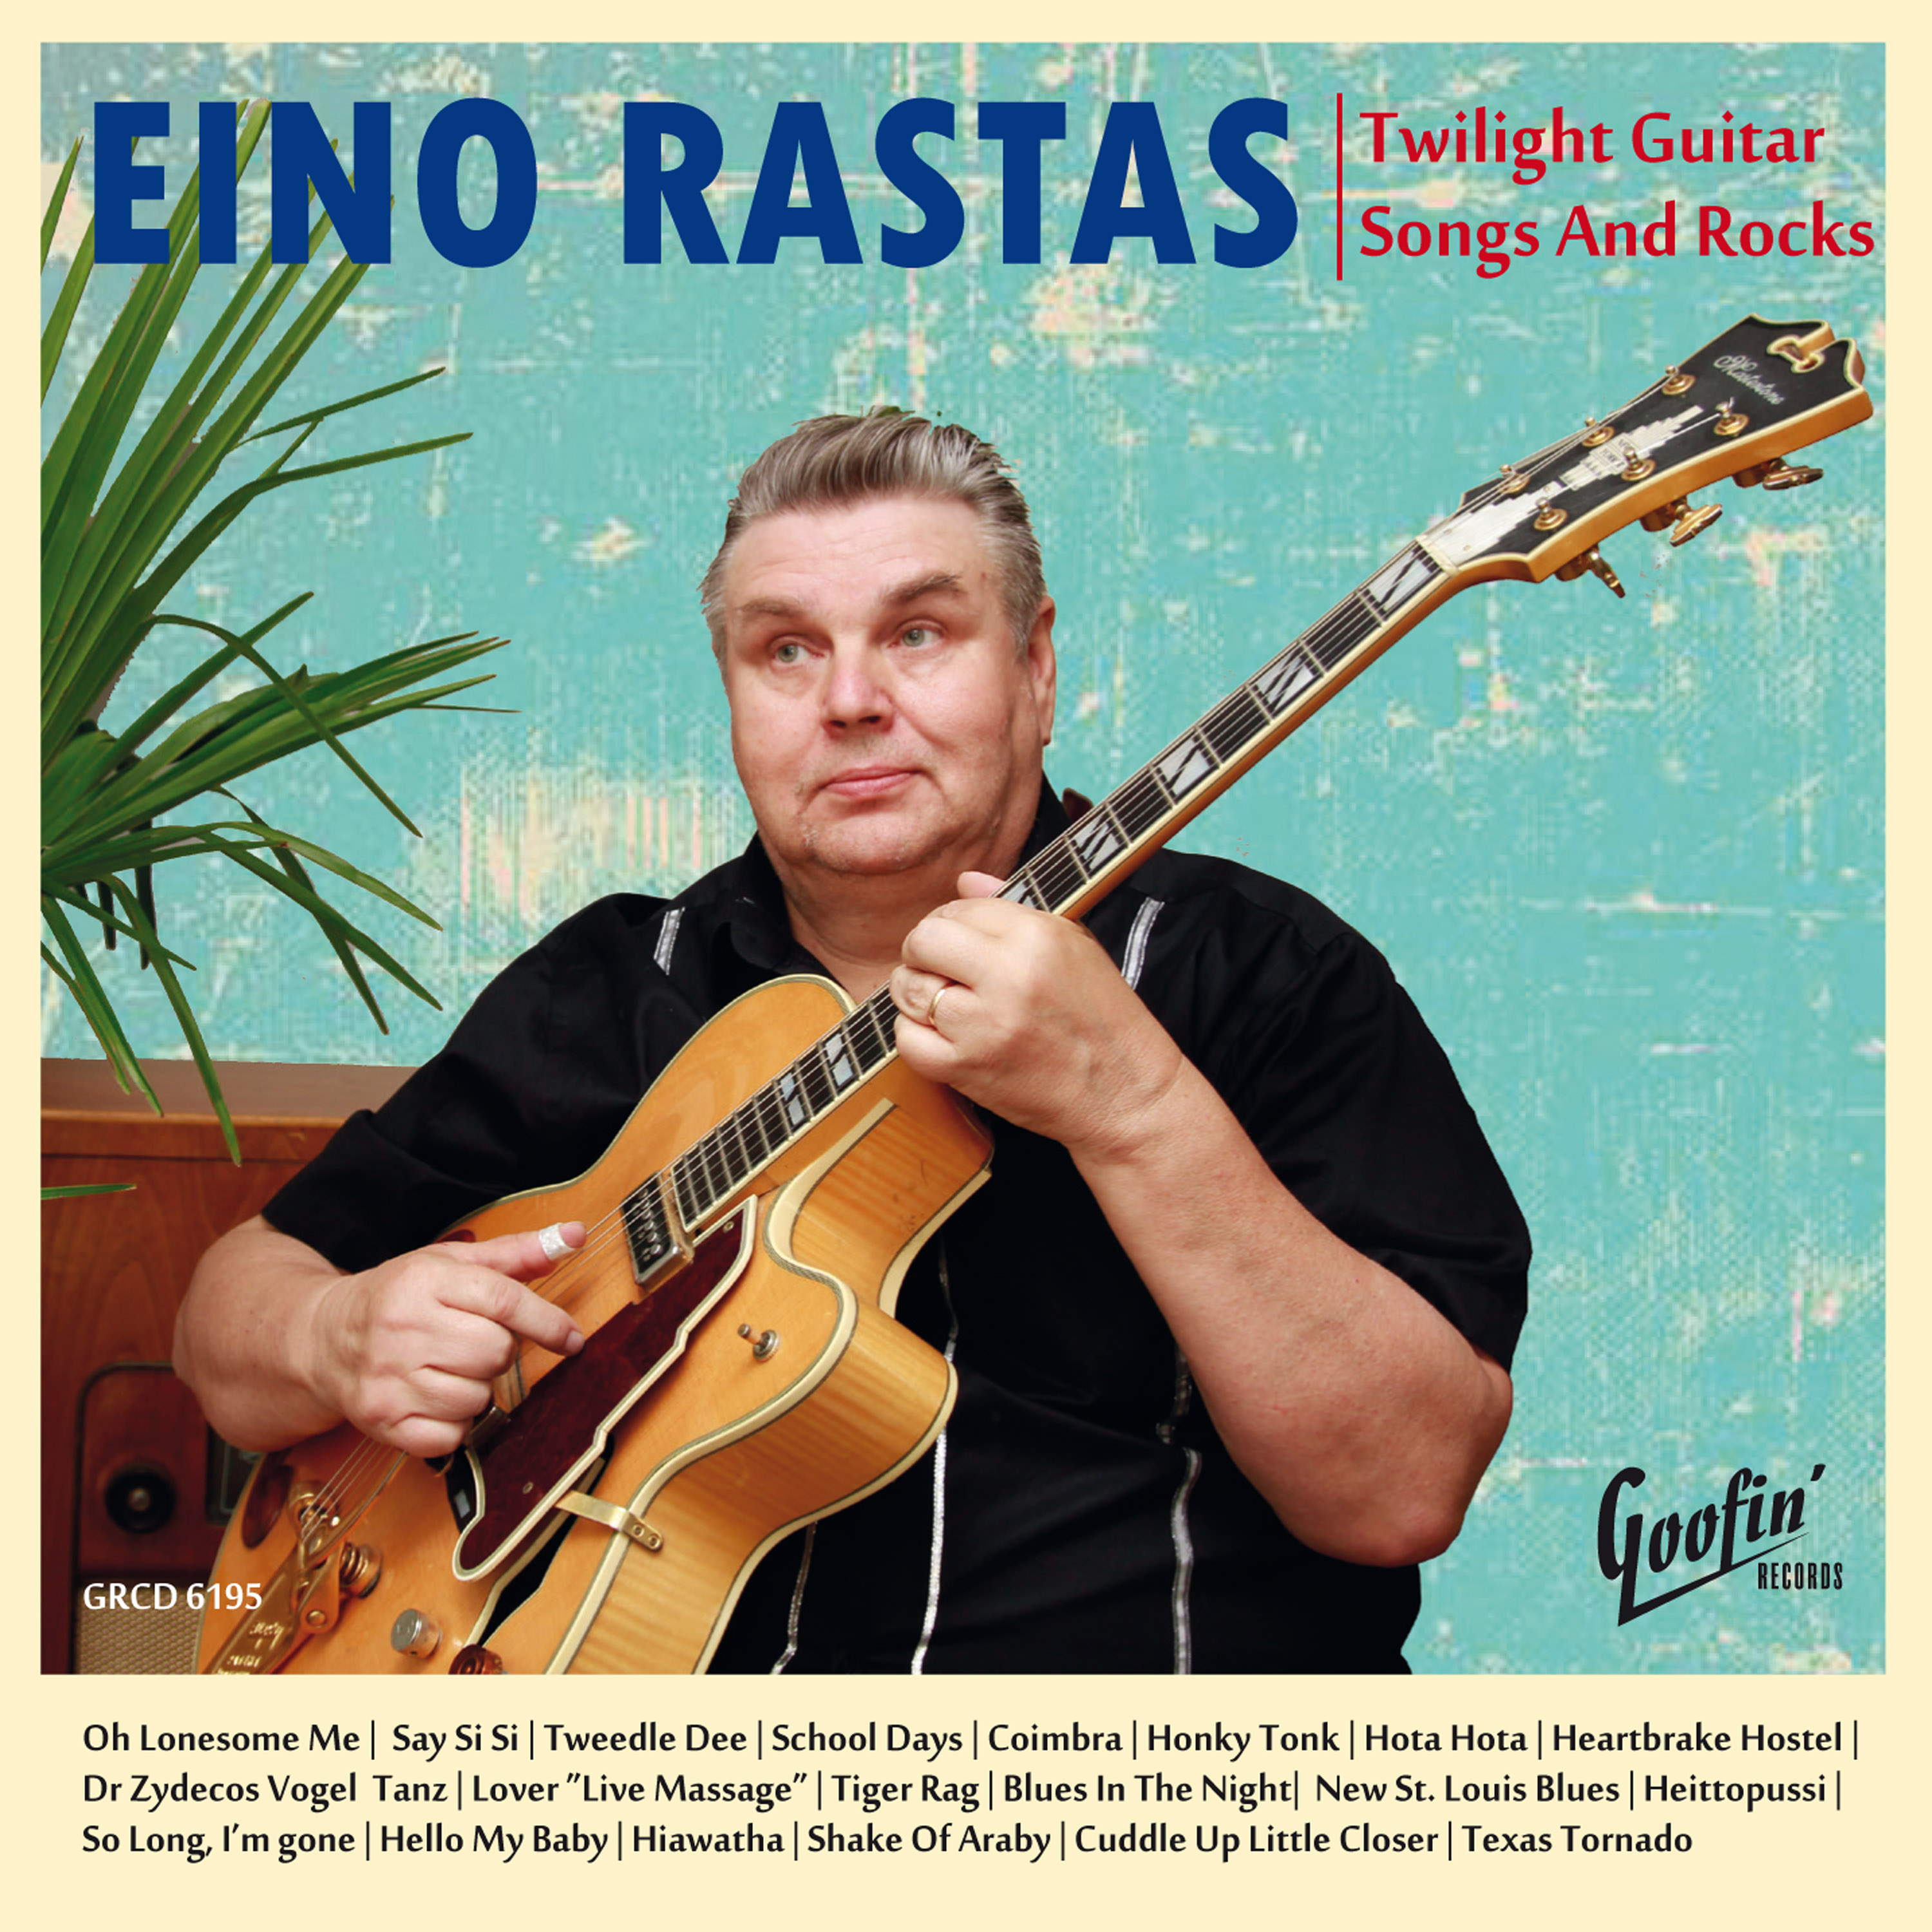 Eino Rastas - Twilight Guitar Songs And Rocks - CD